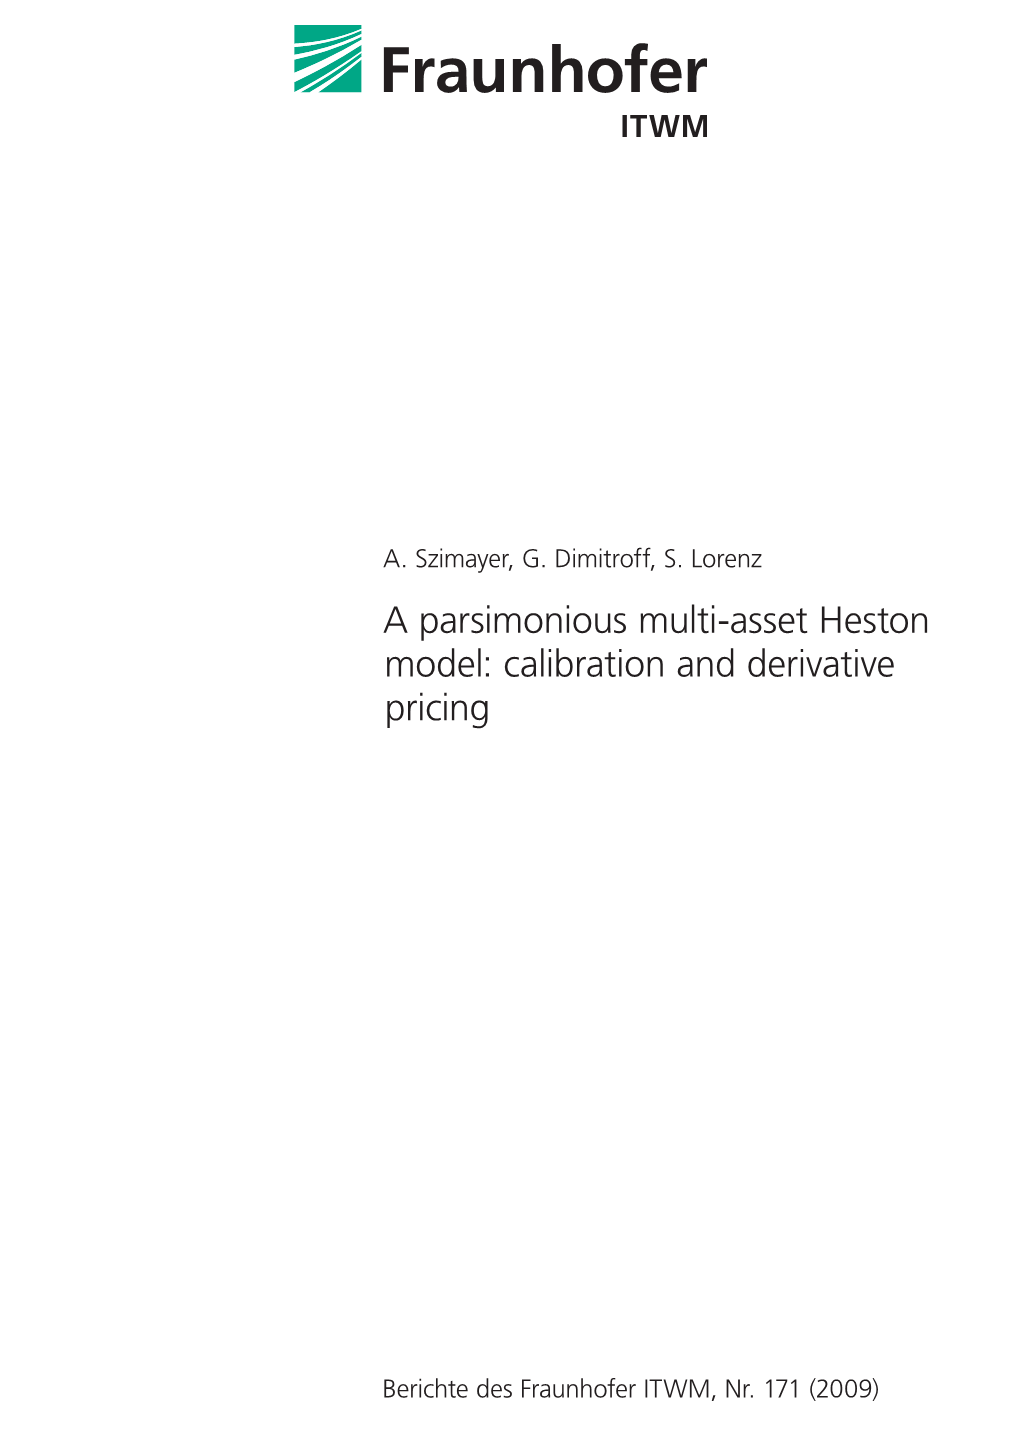 A Parsimonious Multi-Asset Heston Model: Calibration and Derivative Pricing